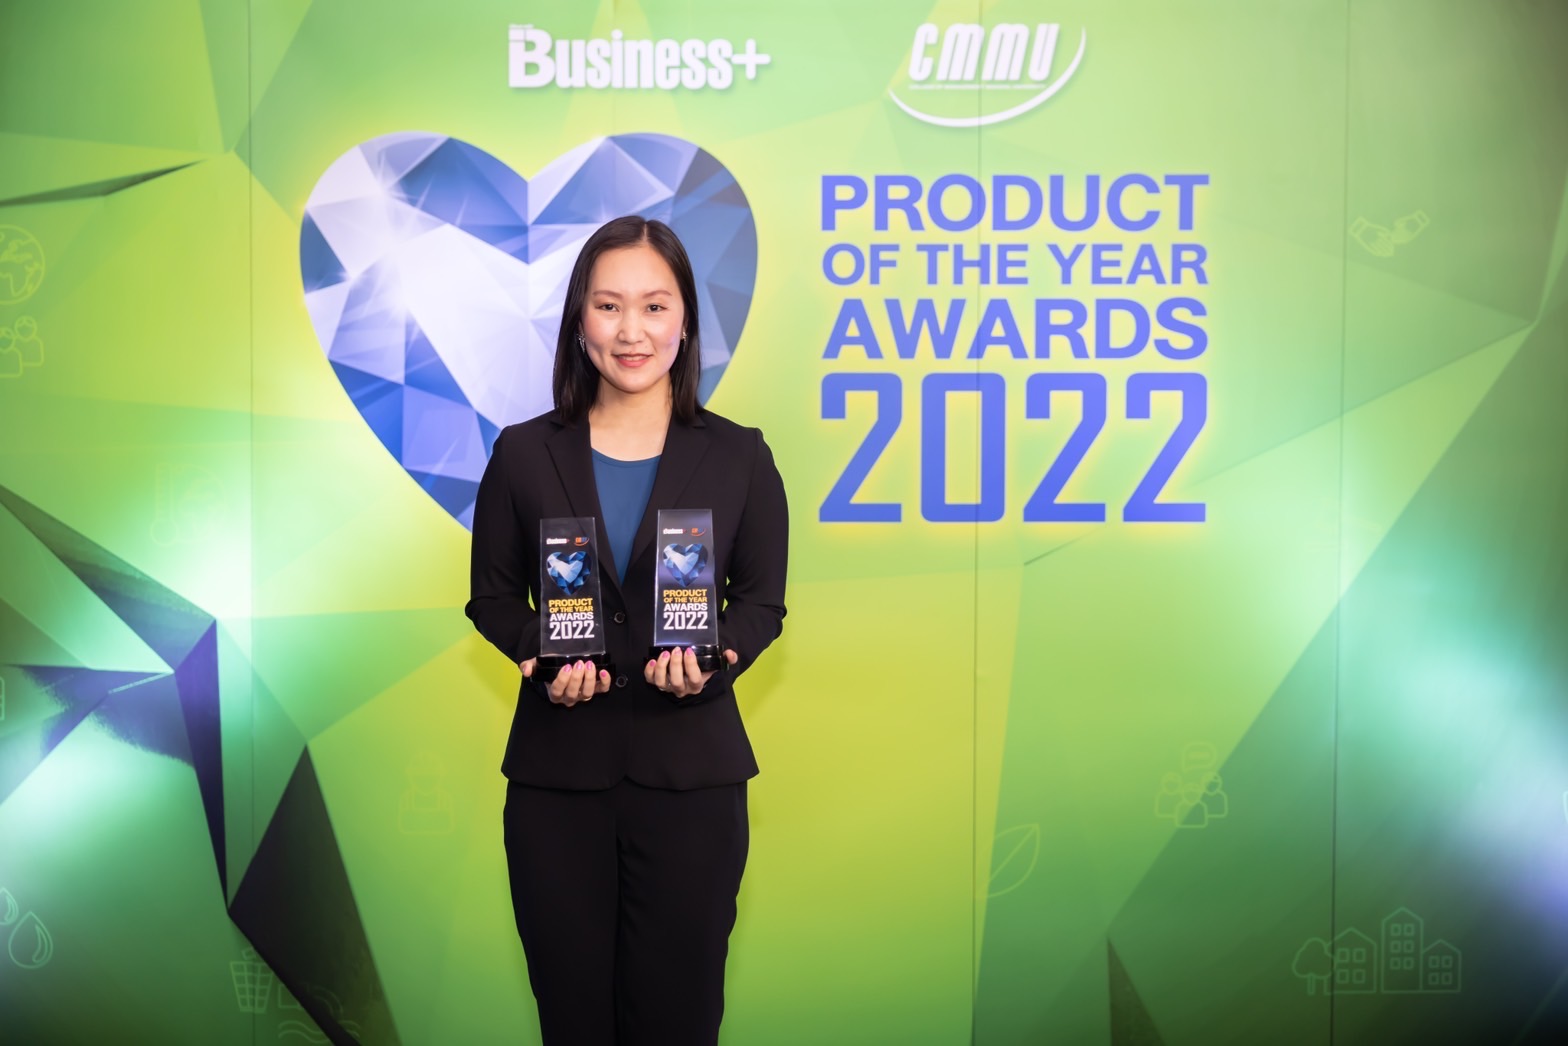 BKI คว้า 2 รางวัลสุดยอดนวัตกรรมสินค้าและบริการแห่งปี Business+ Product of the Year Awards 2022 ติดต่อกัน 3 ปีซ้อน